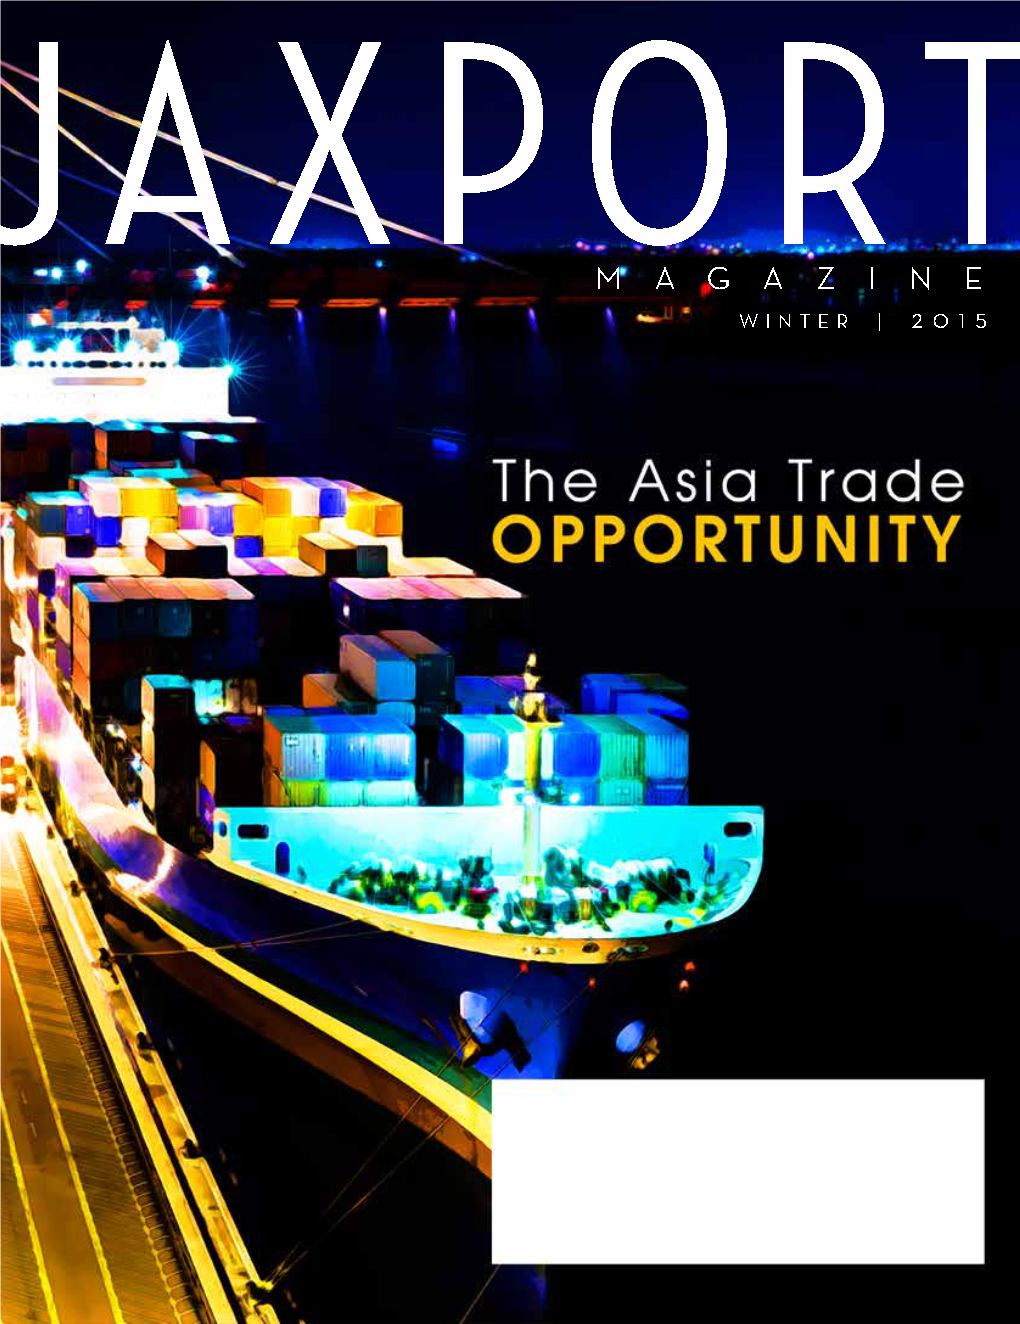 JAXPORT Magazine Winter 2015.Pdf